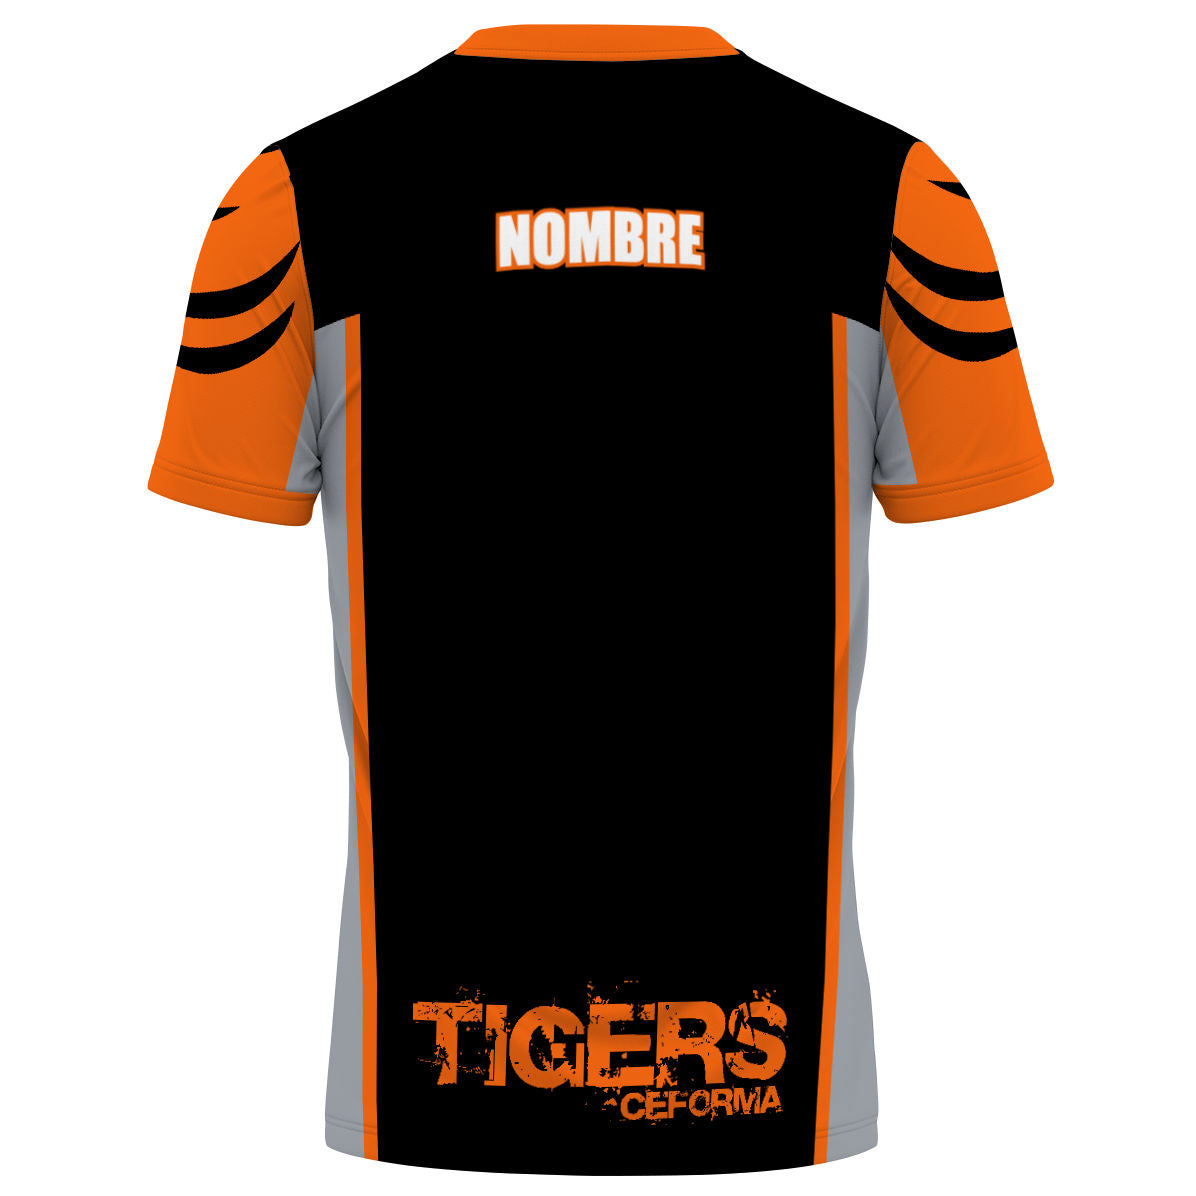 Tigers Ceforma 2 - Men's Performance Shirt